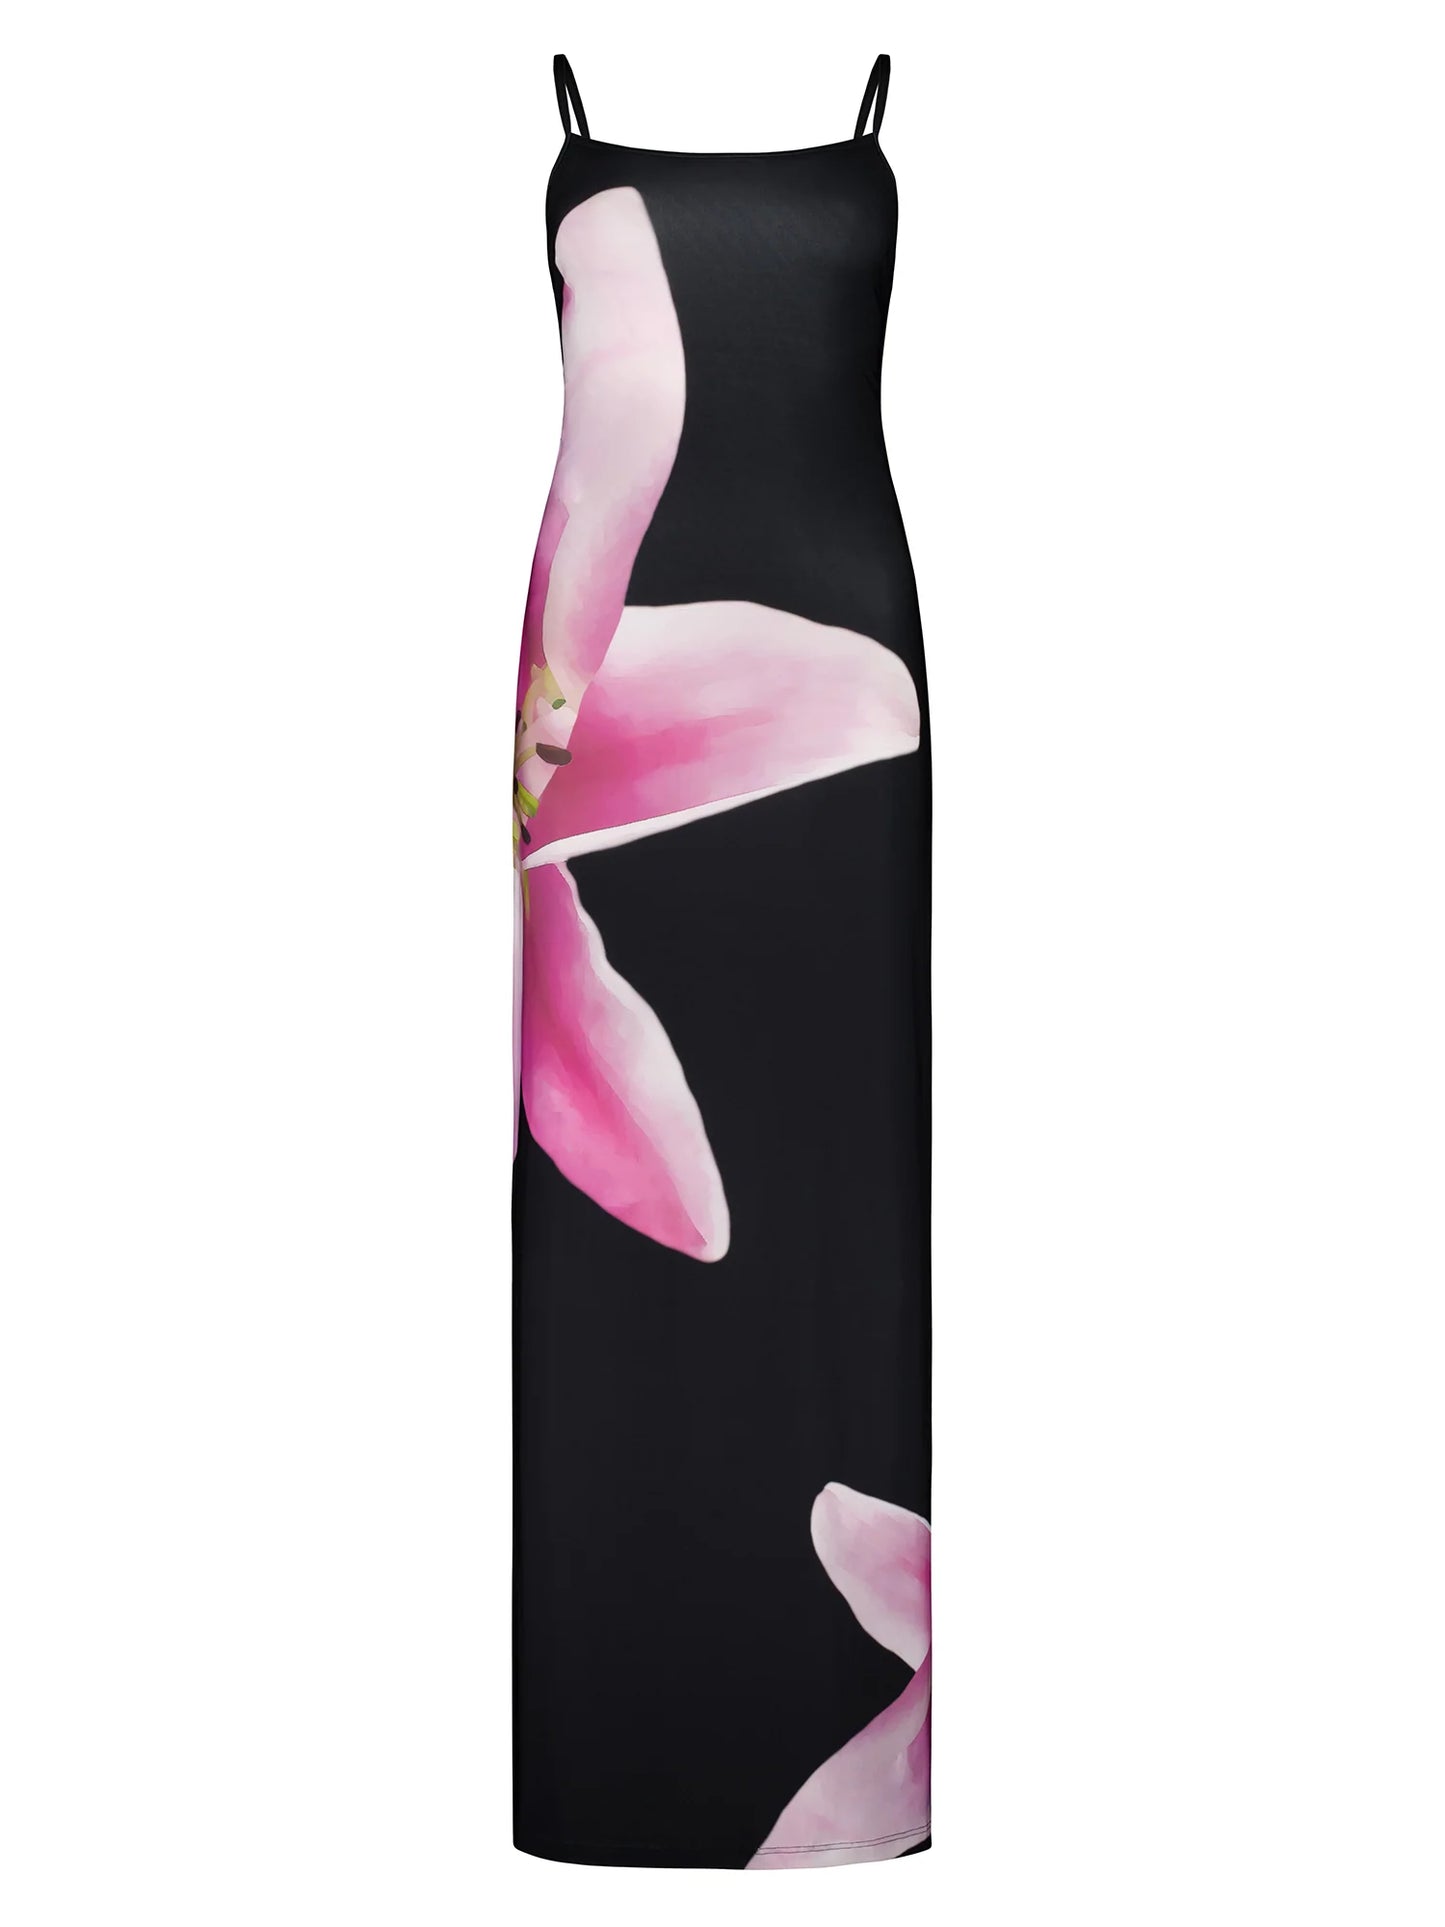 Lily floral slip dress